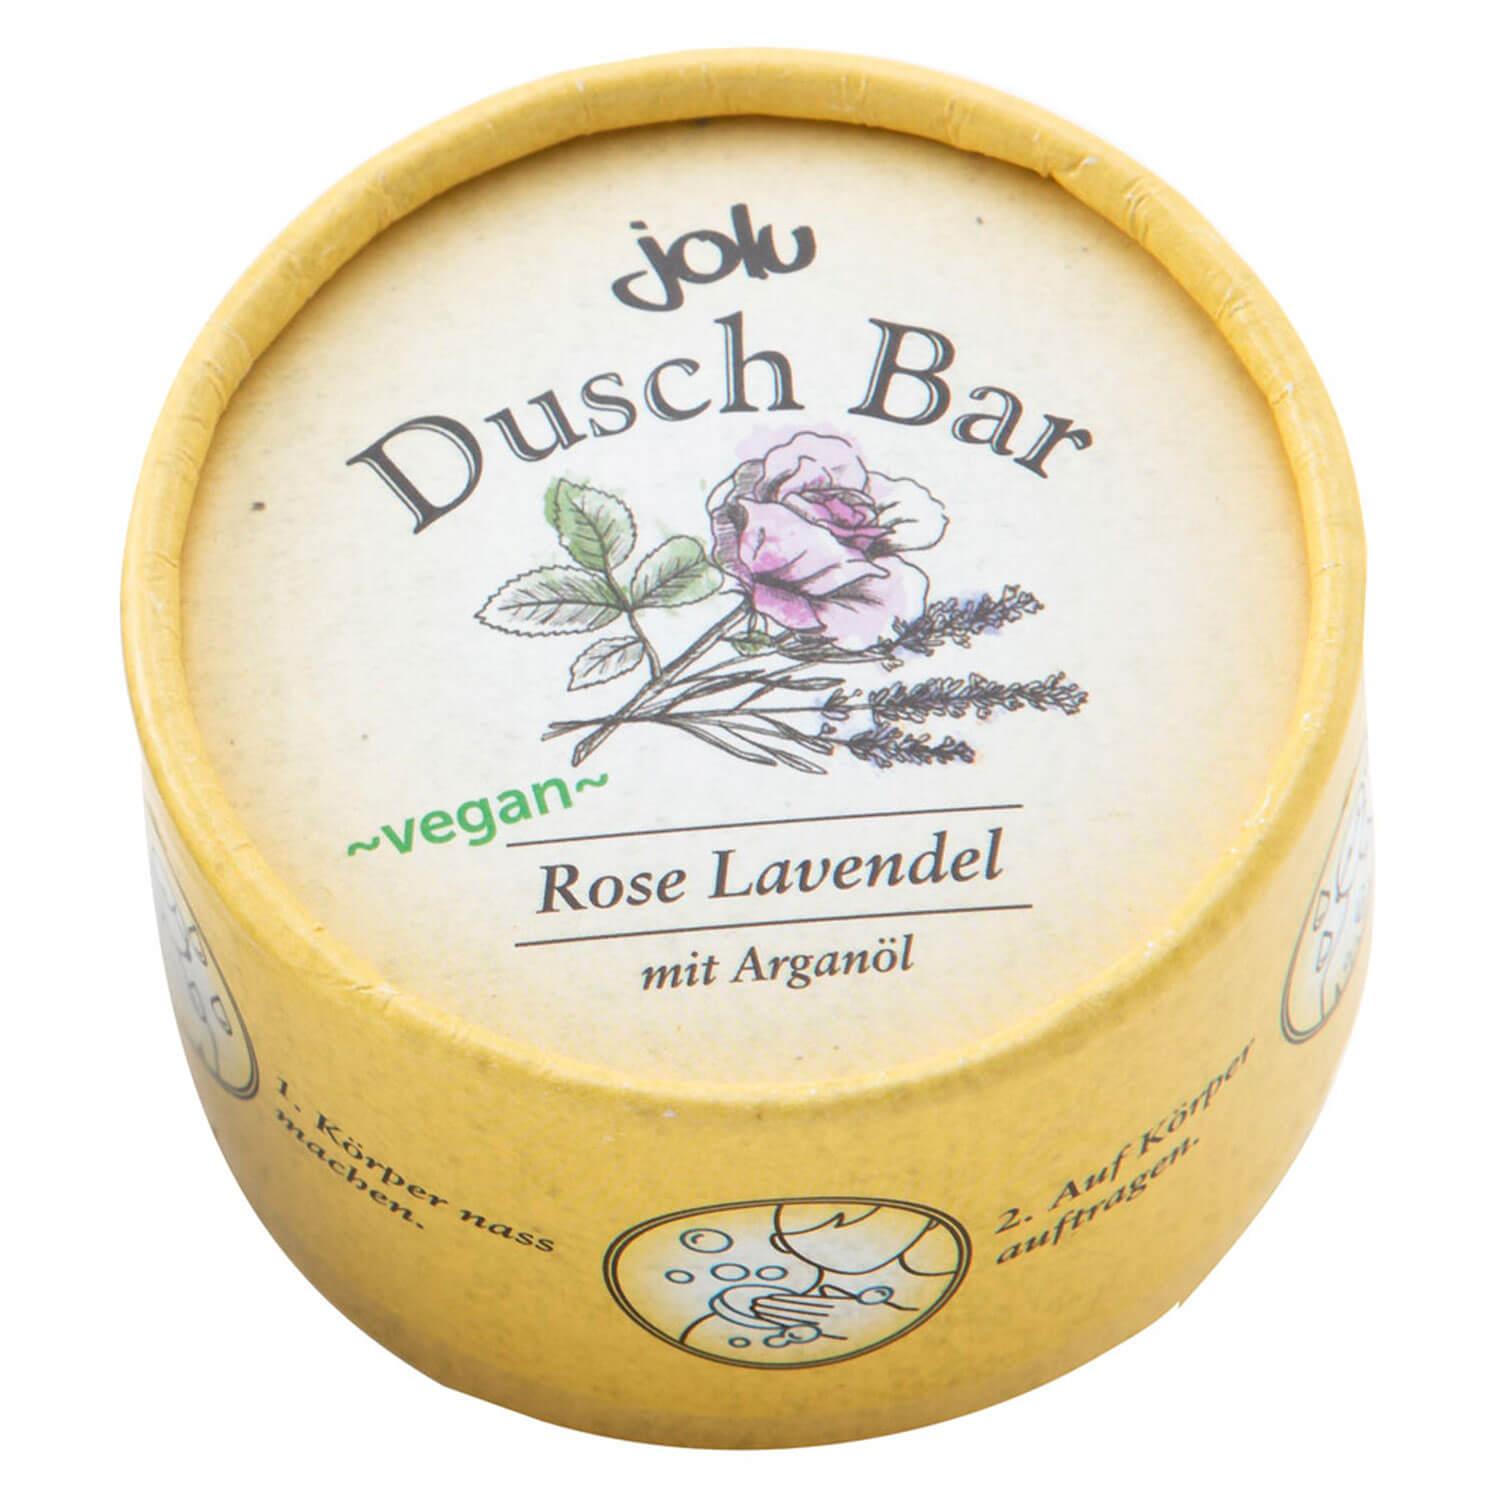 jolu - Dusch Bar Rose Lavendel